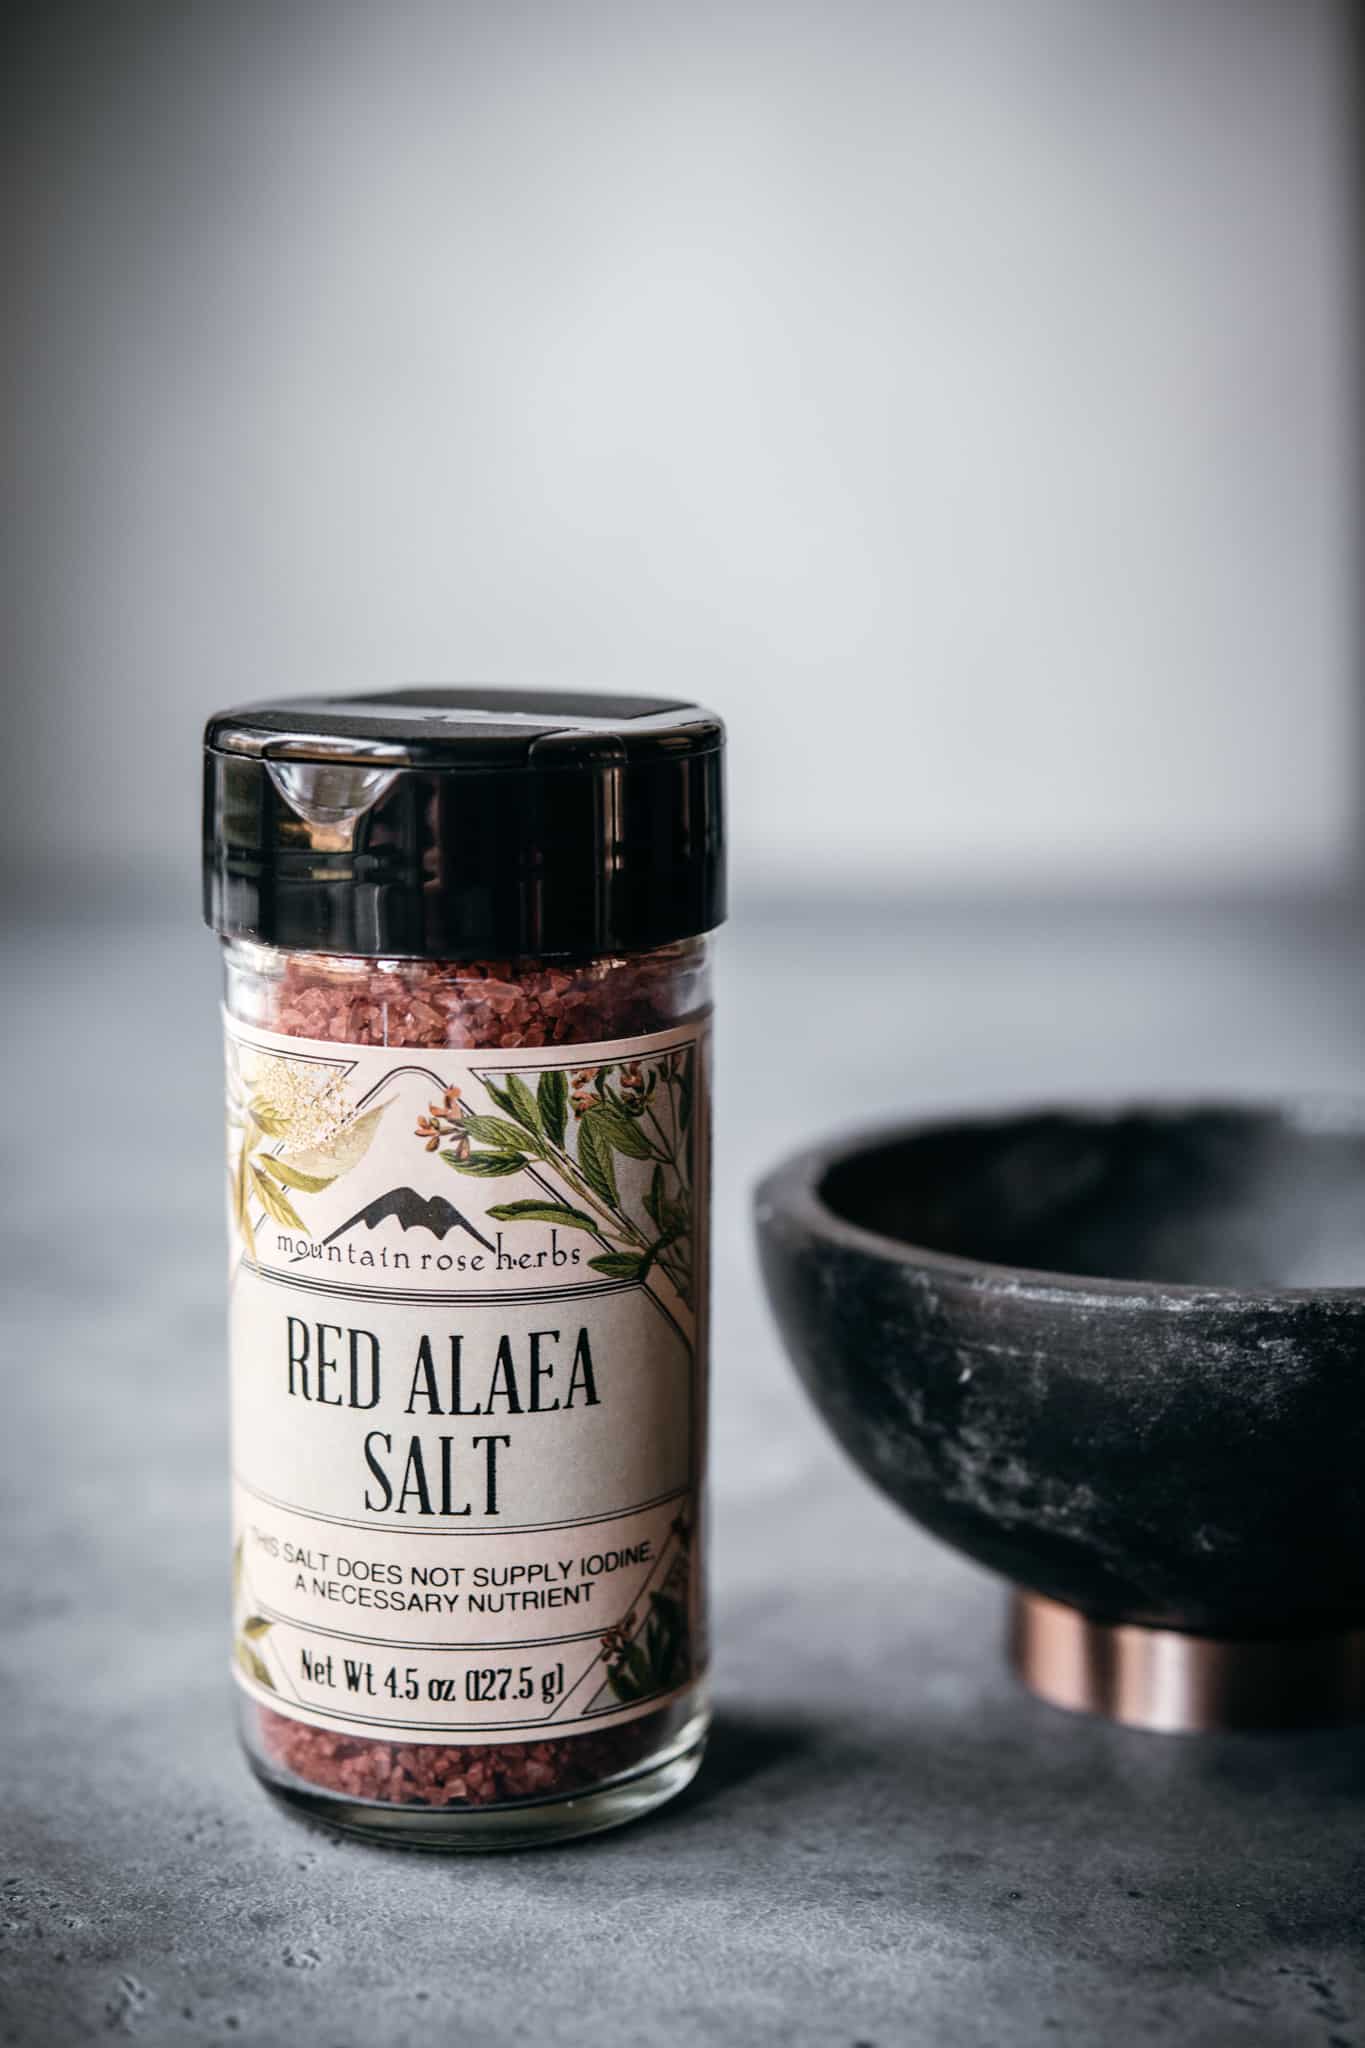 Mountain Rose Herbs red alaea salt in bottle